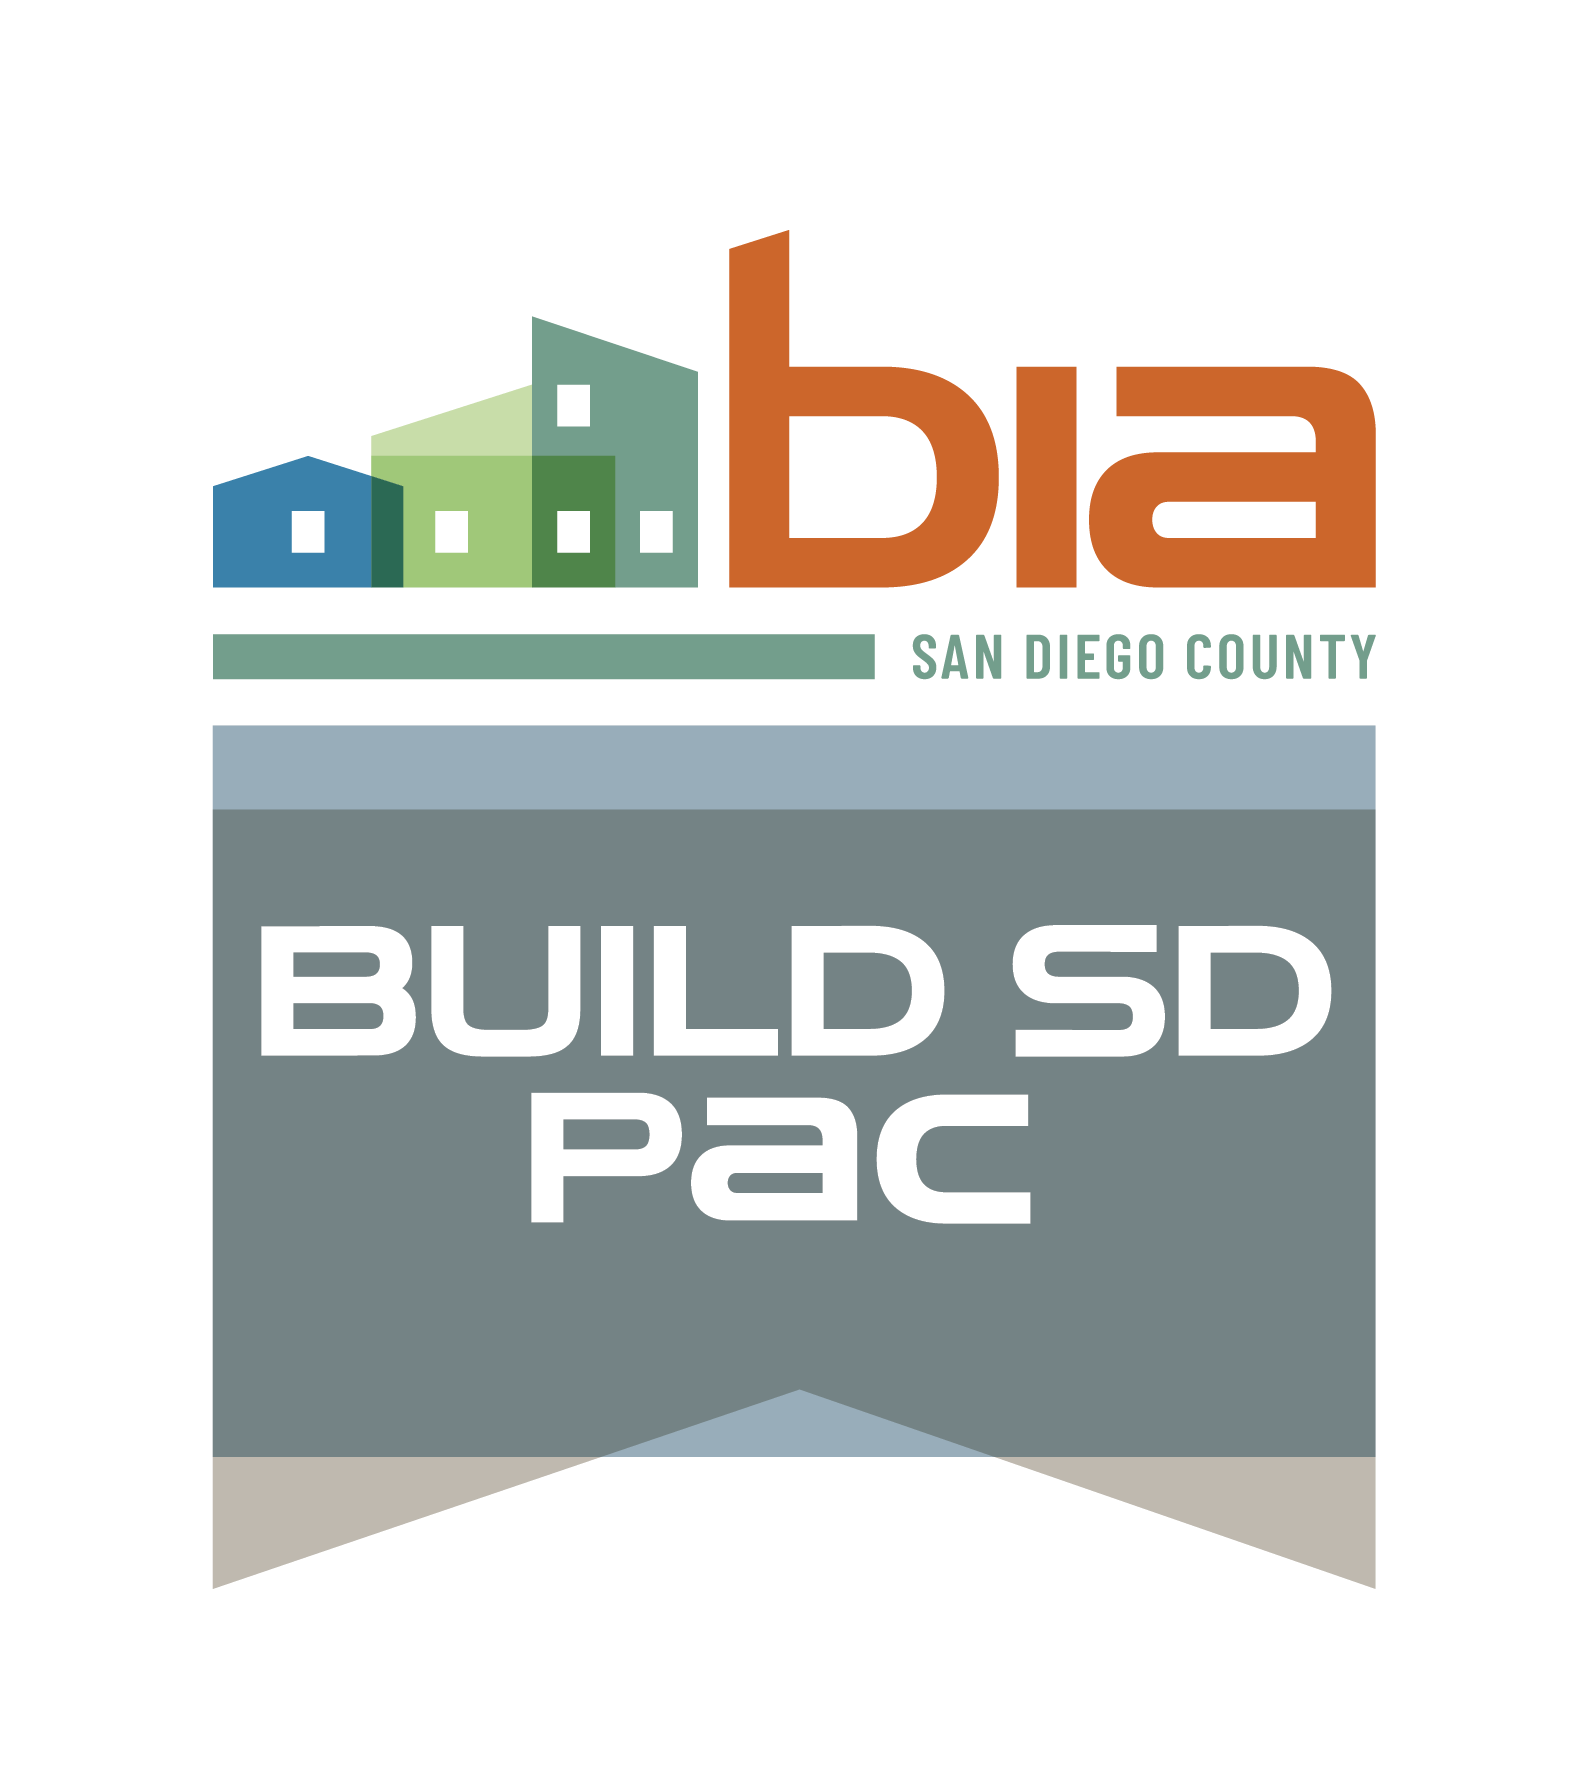 Build sd pac